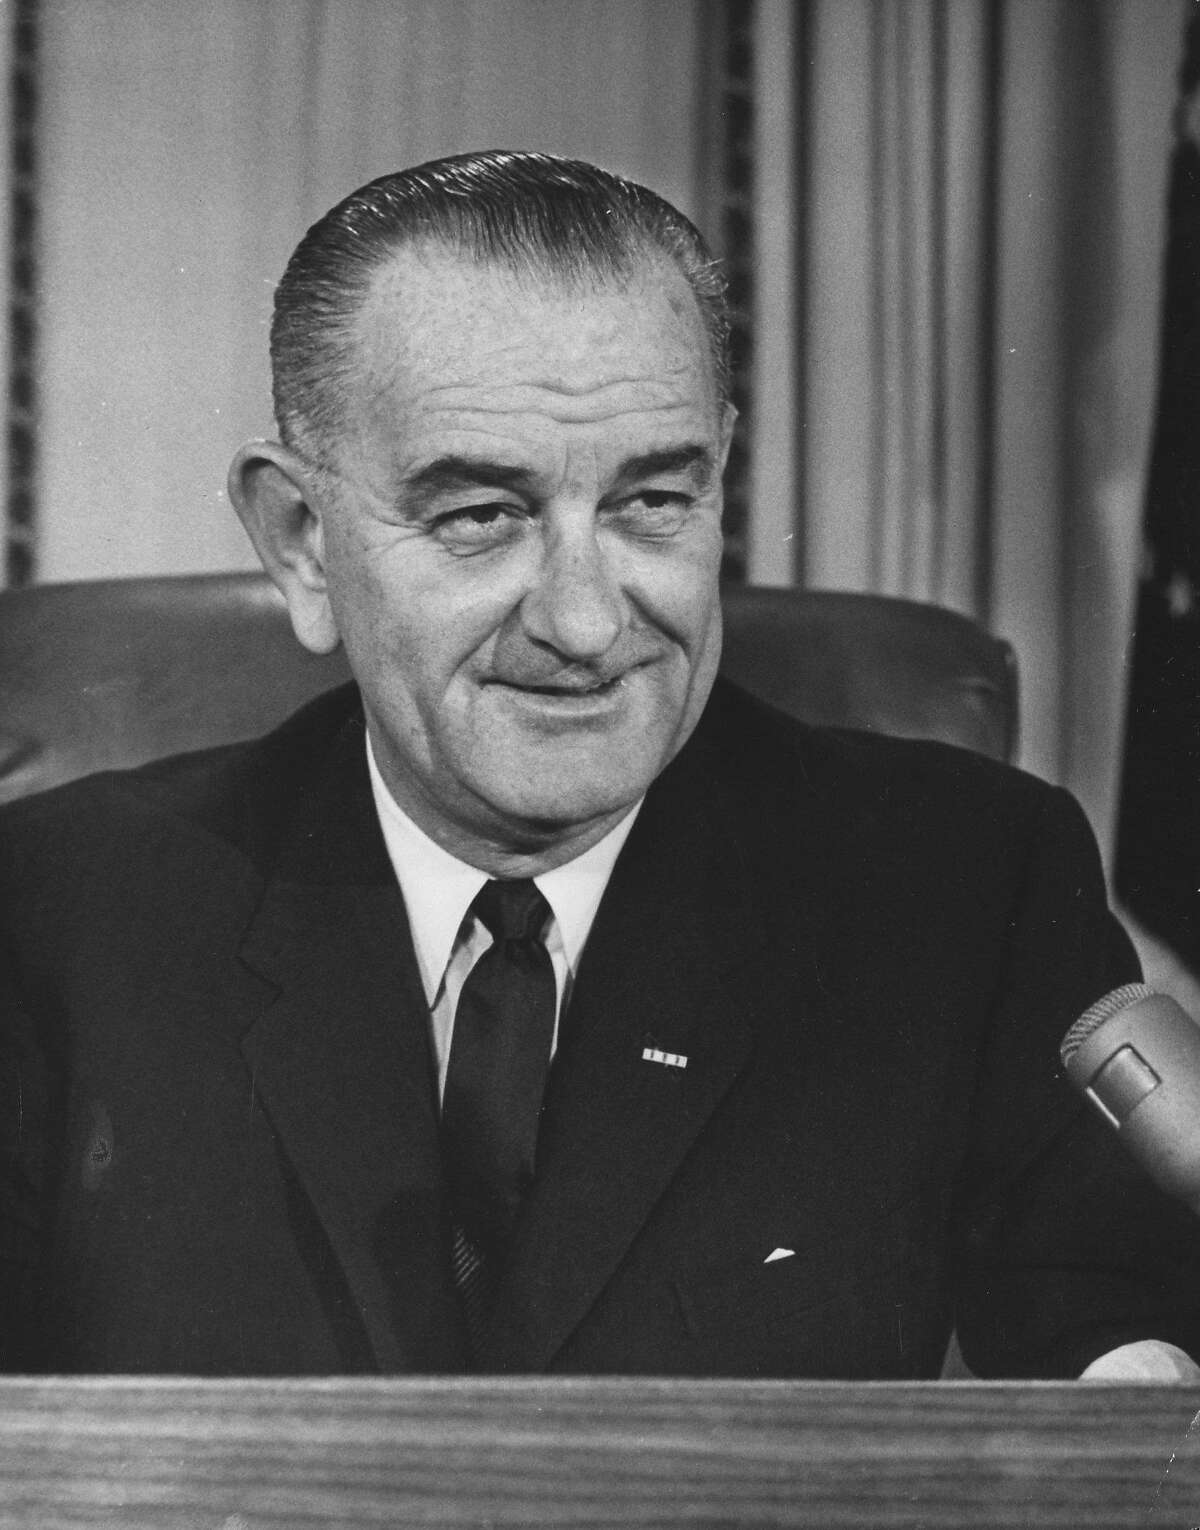 Presidential winner: Lyndon B. Johnson Connecticut winner: Lyndon B. Johnson Voting breakdown in Connecticut:  Lyndon B. Johnson (D) - 67.81% Barry Goldwater (R) - 32.09%